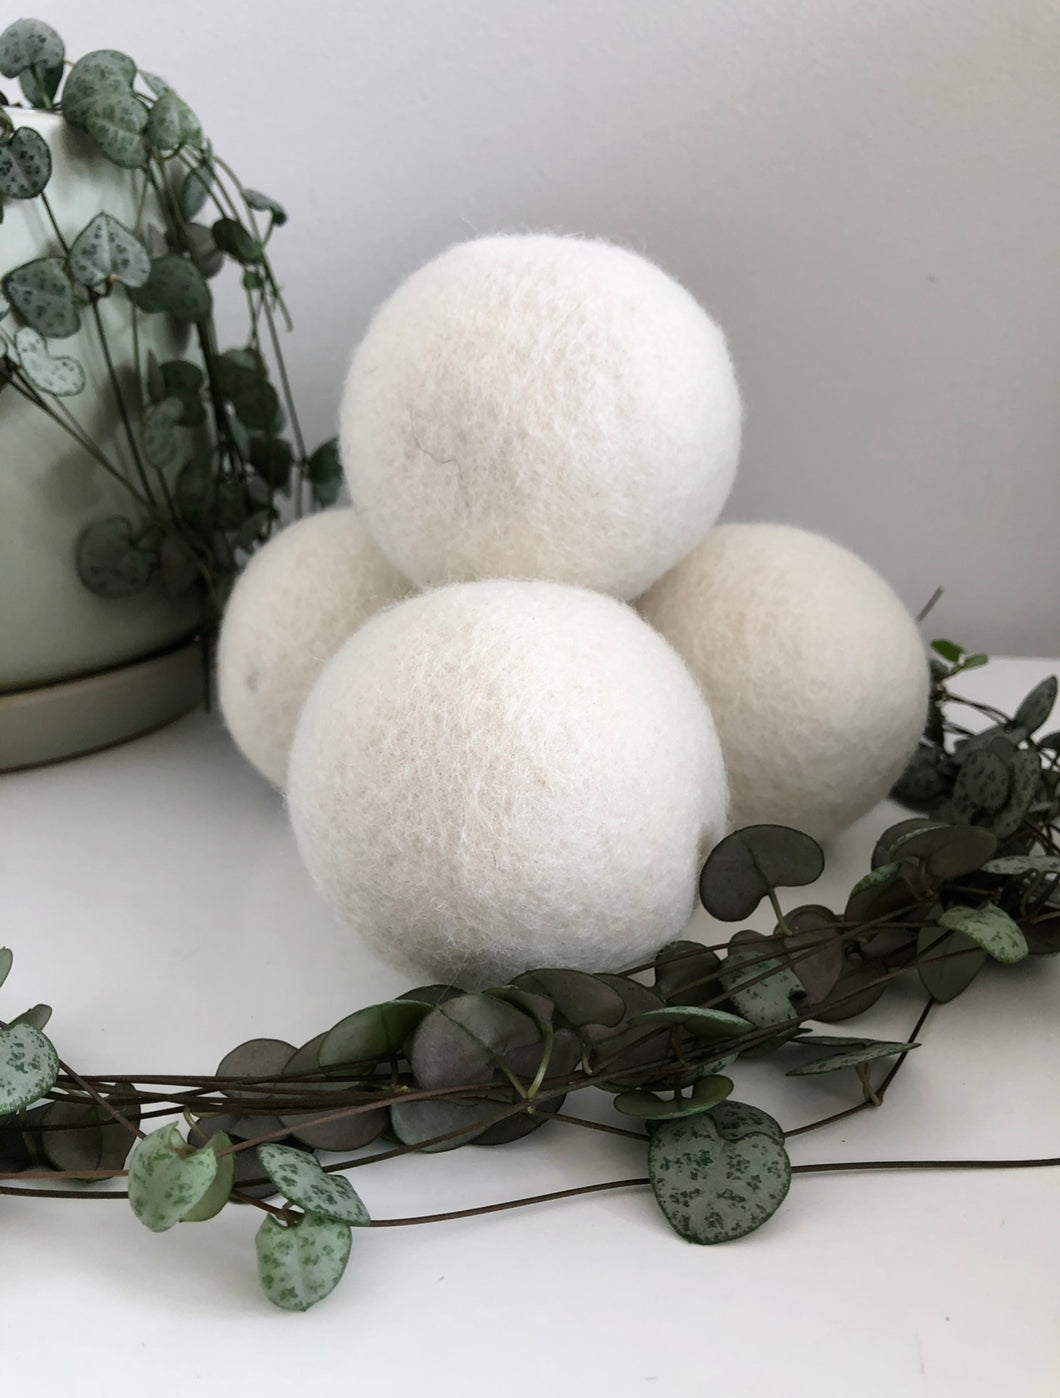 NZ wool dryer balls